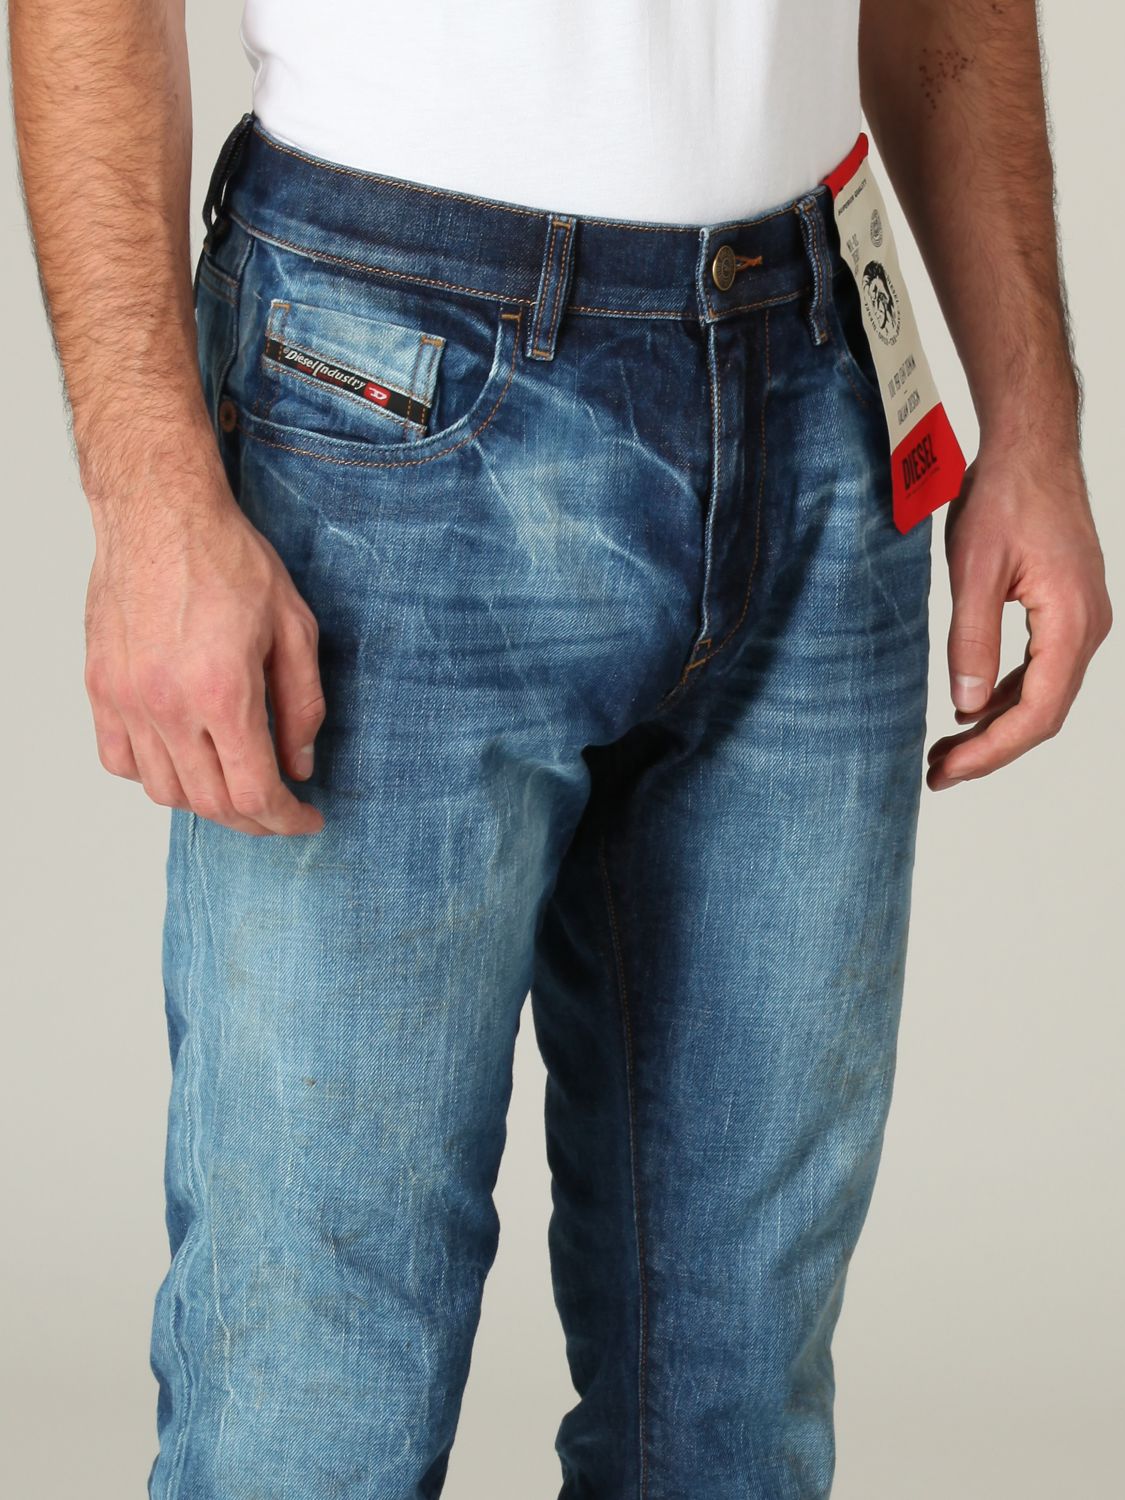 DIESEL: 5-pocket jeans in washed denim - Denim | Diesel jeans 00SPW4 ...